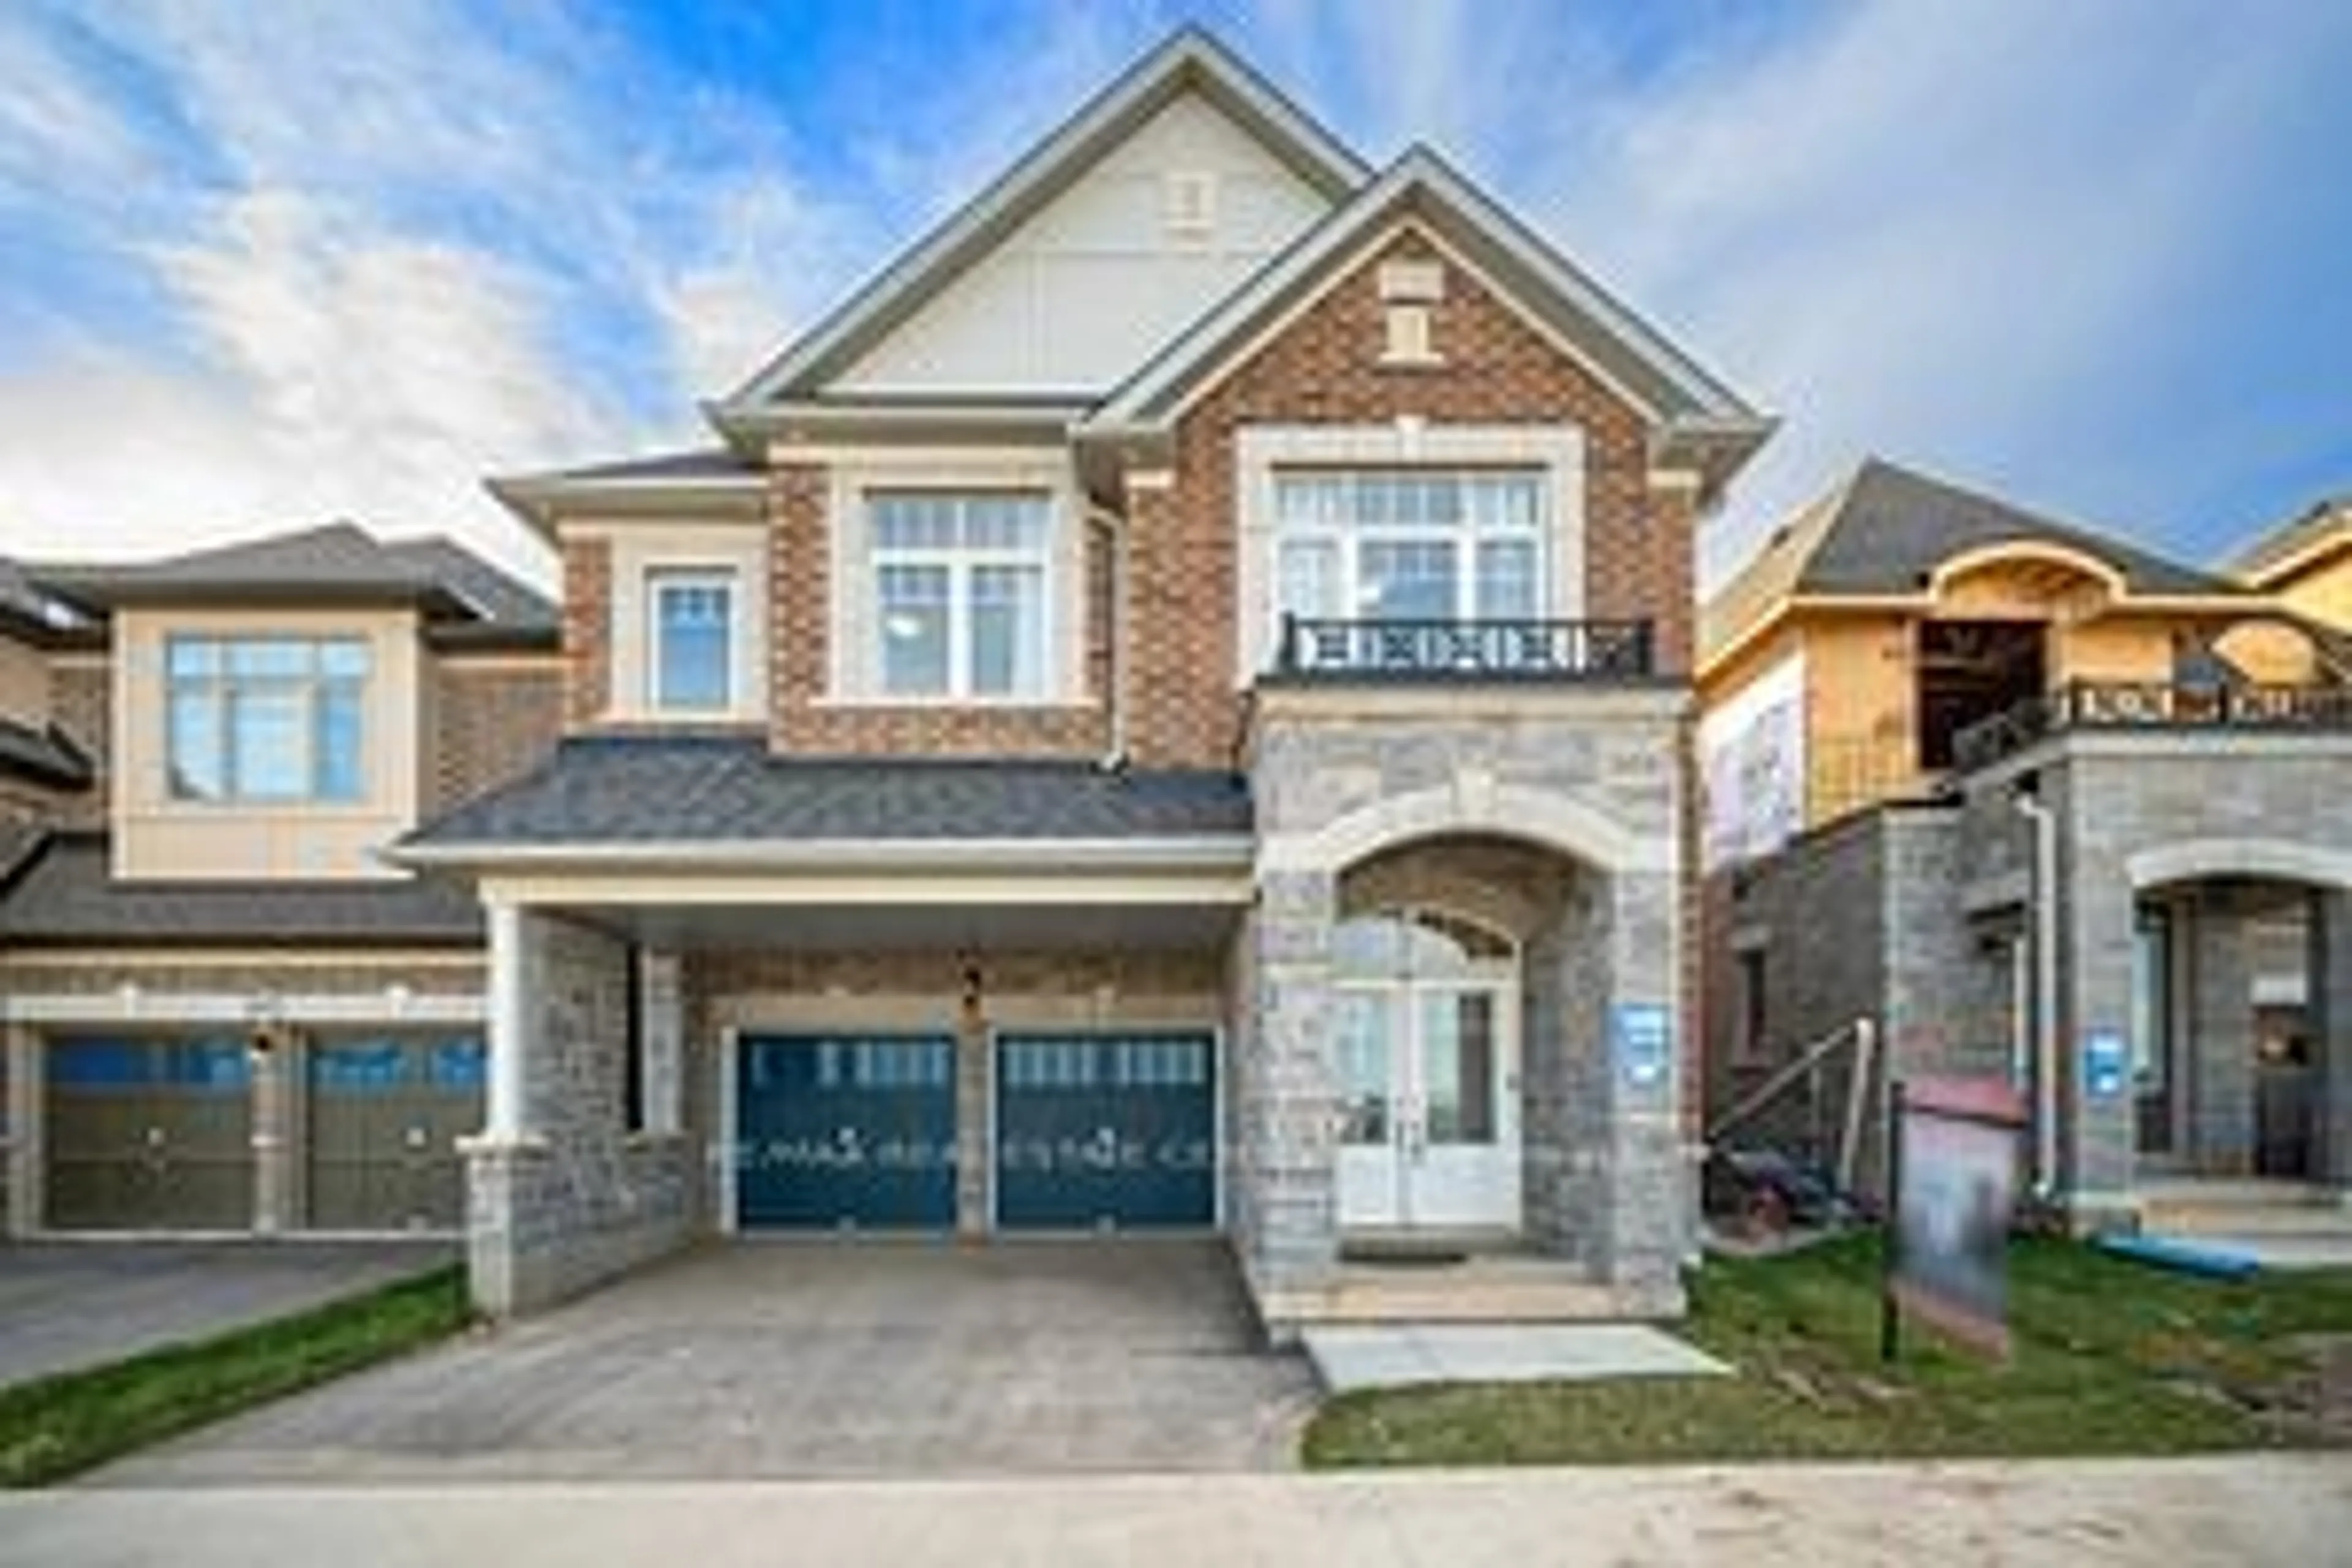 Home with brick exterior material for 3939 Lodi Rd, Burlington Ontario L7M 0Z6